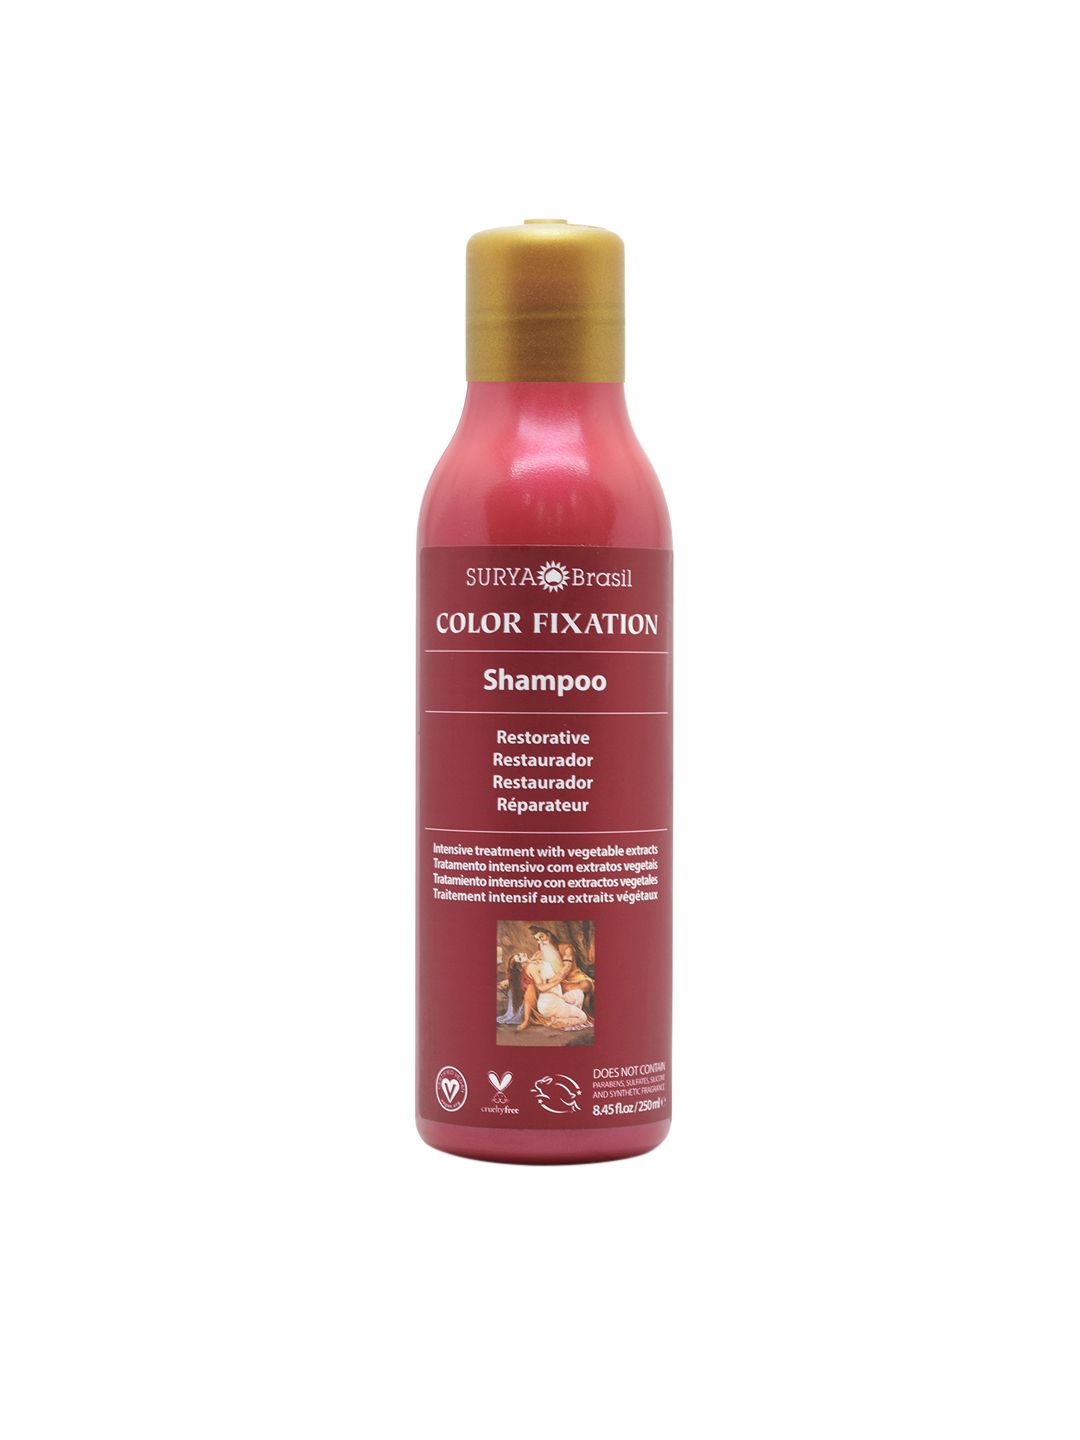 SURYA Brasil Color Fixation Restorative Shampoo with Aloe Vera - 250 ml Price in India